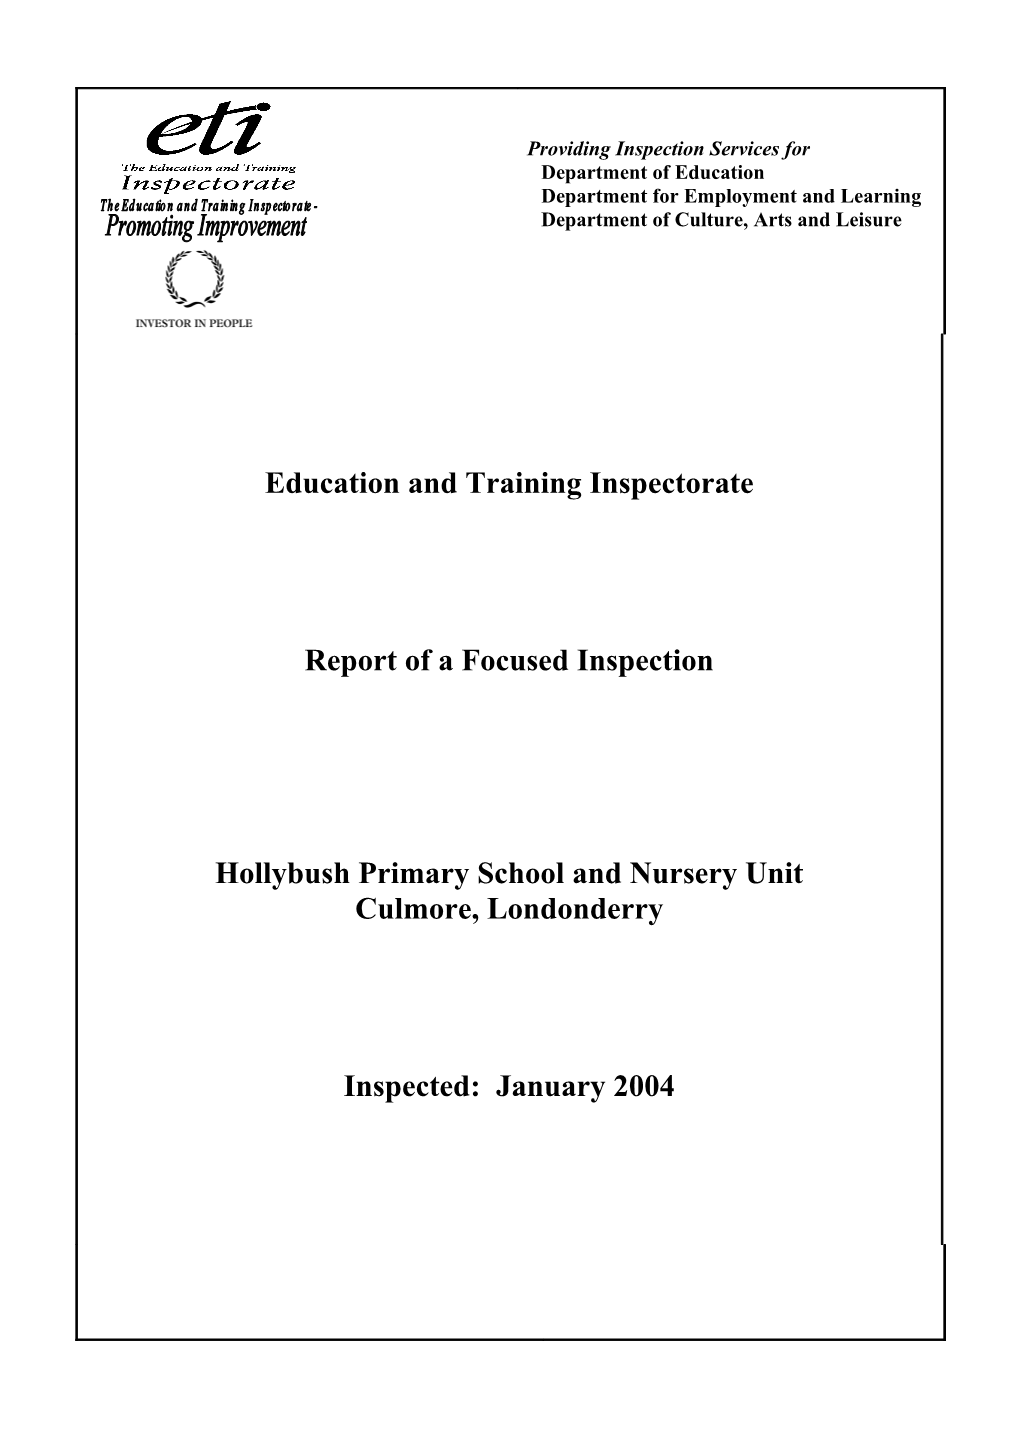 Report on the Inspection of Hollybush Primary School Nursery Unit, Ardan Road, Culmore